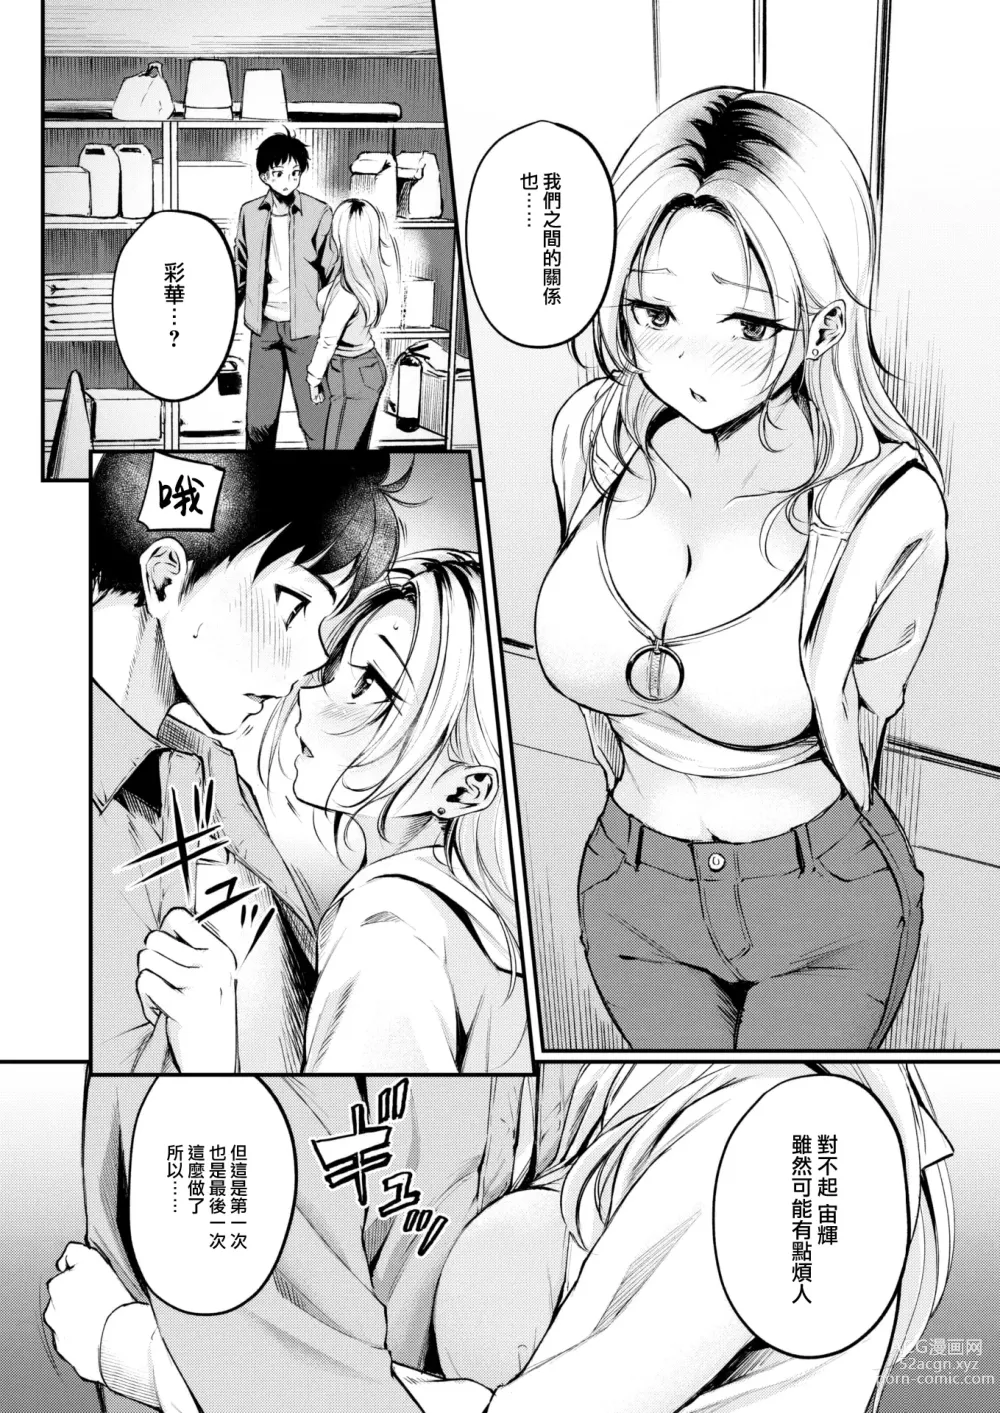 Page 7 of manga Senkou Hanabi no Koi